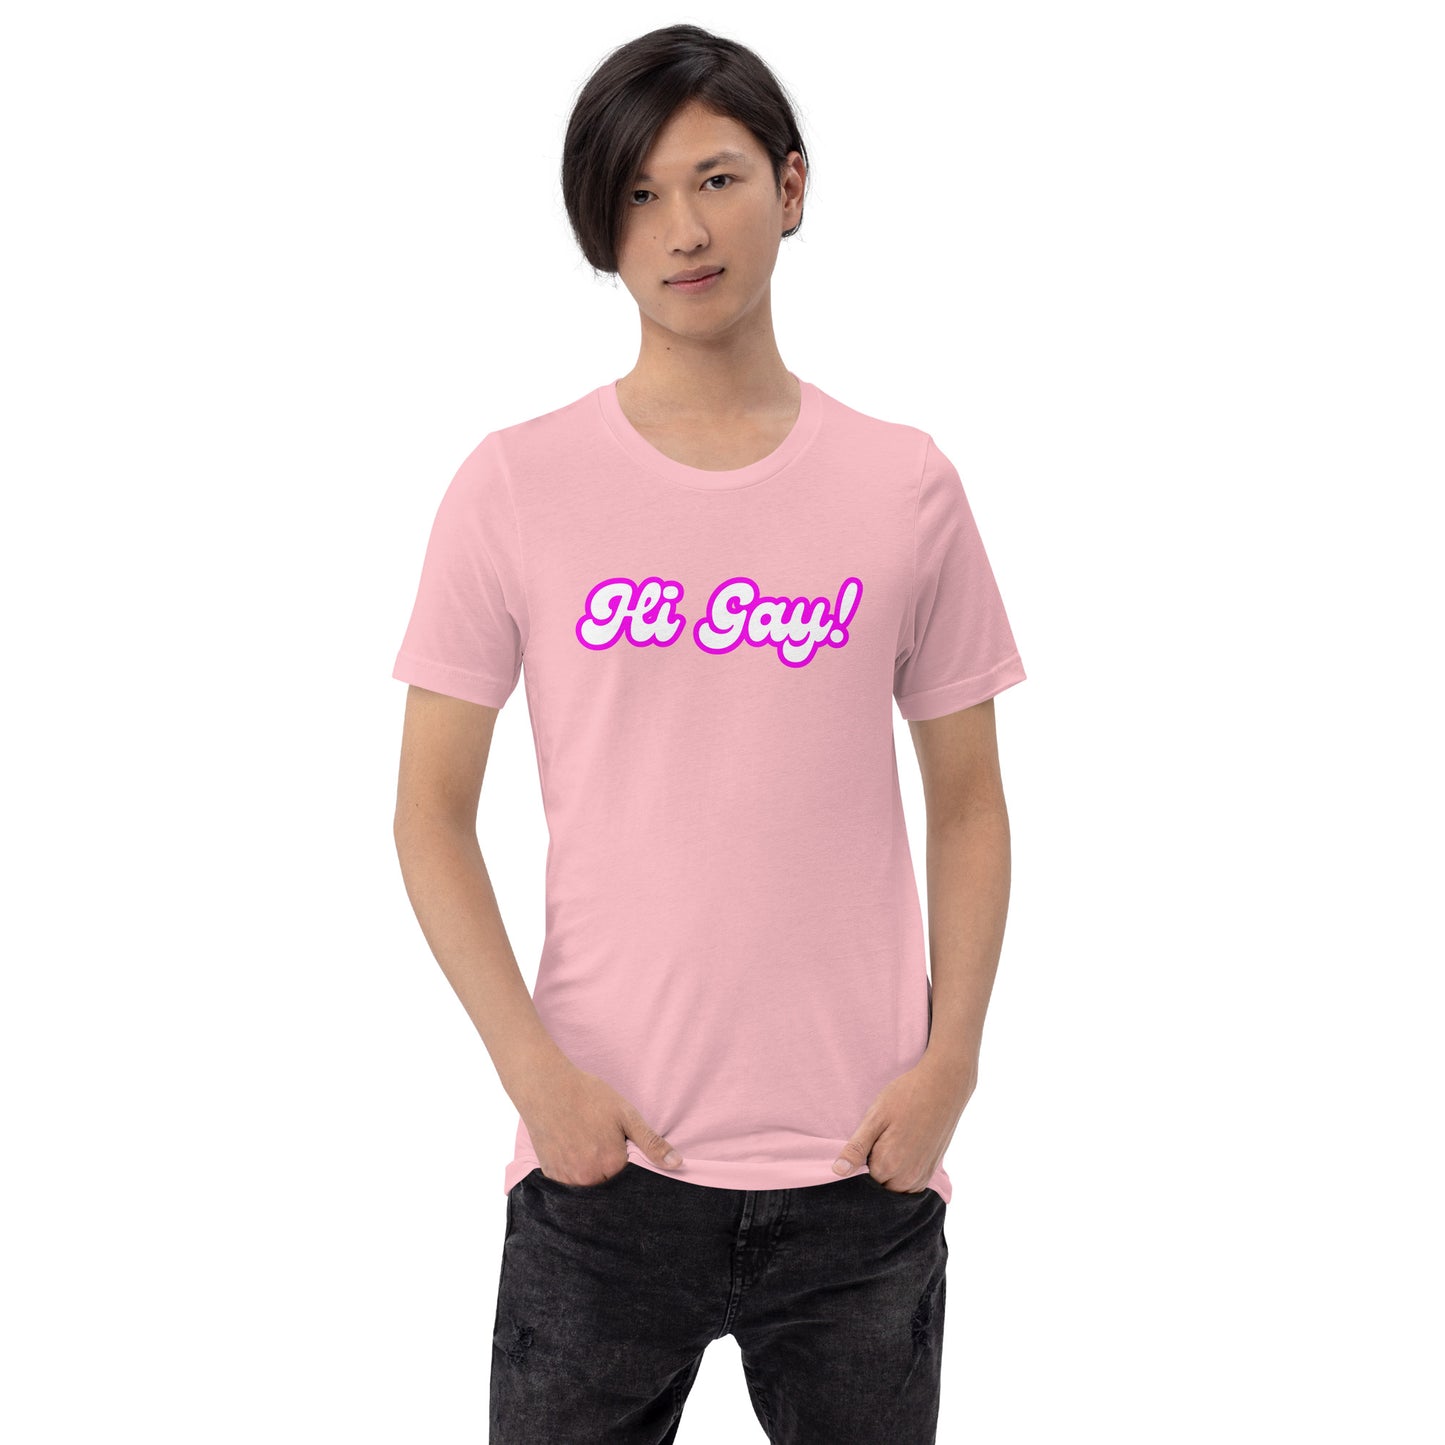 "Hi Gay!" Unisex t-shirt